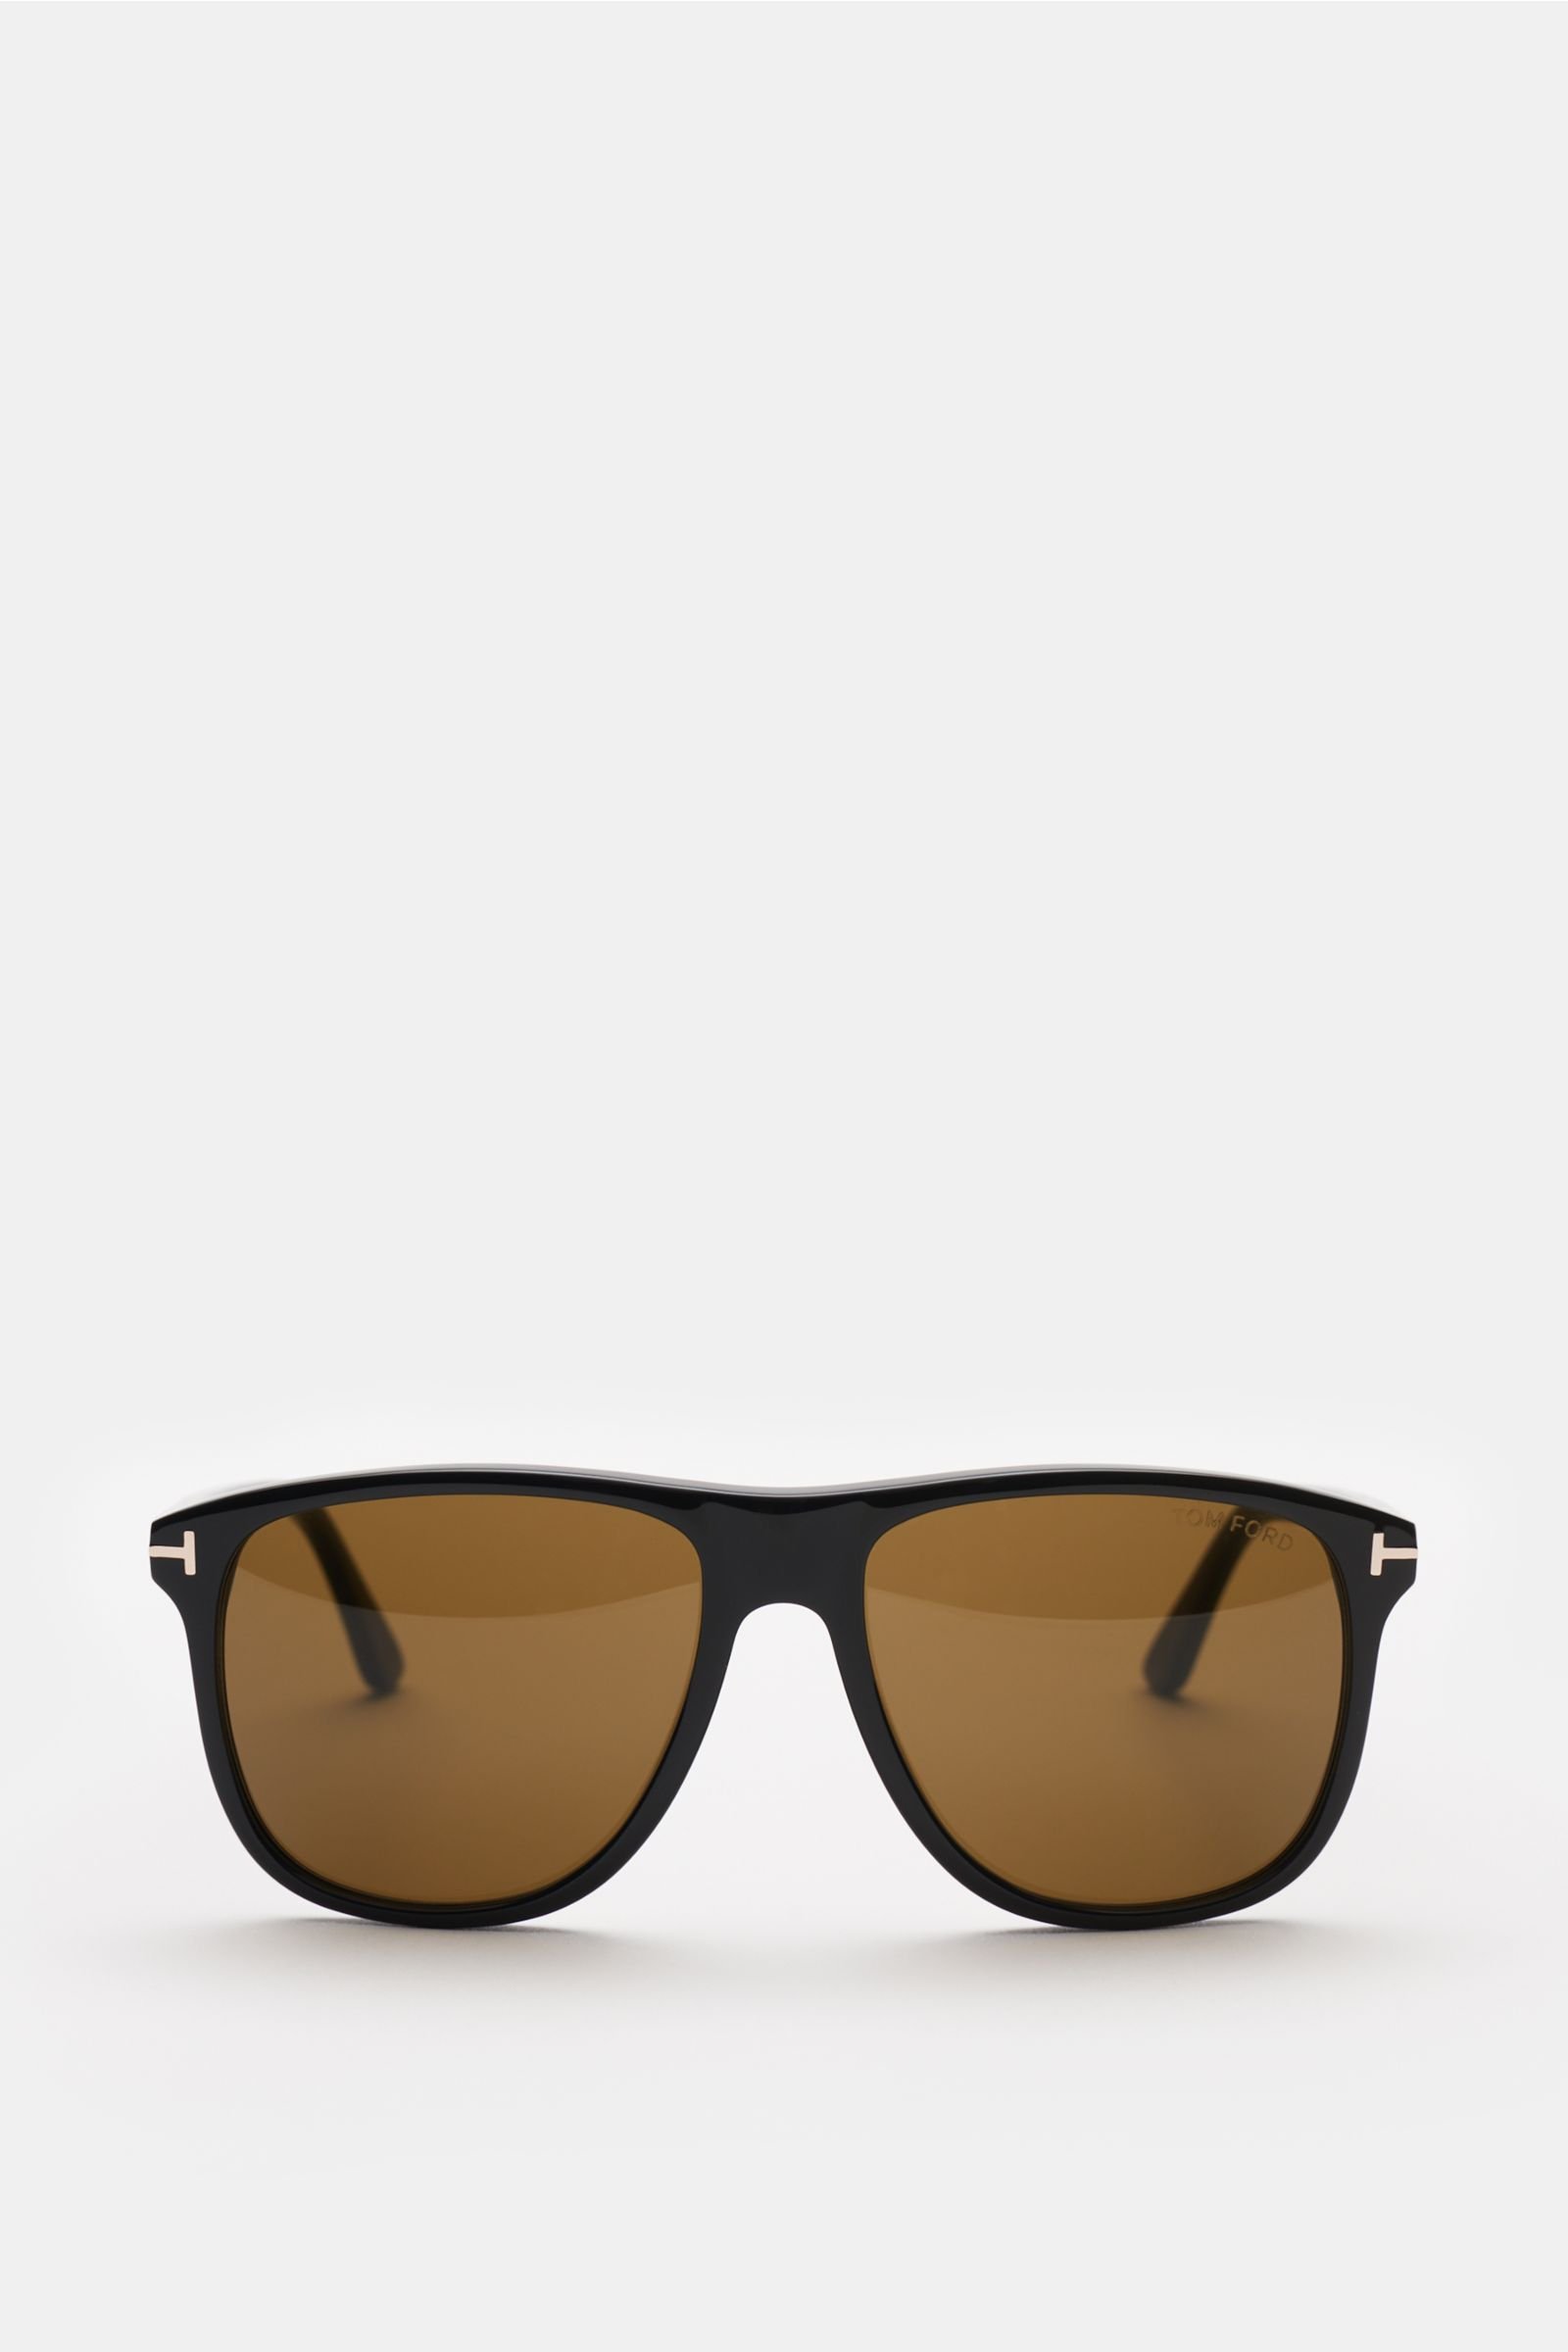 Sonnenbrille 'Joni' schwarz/khaki